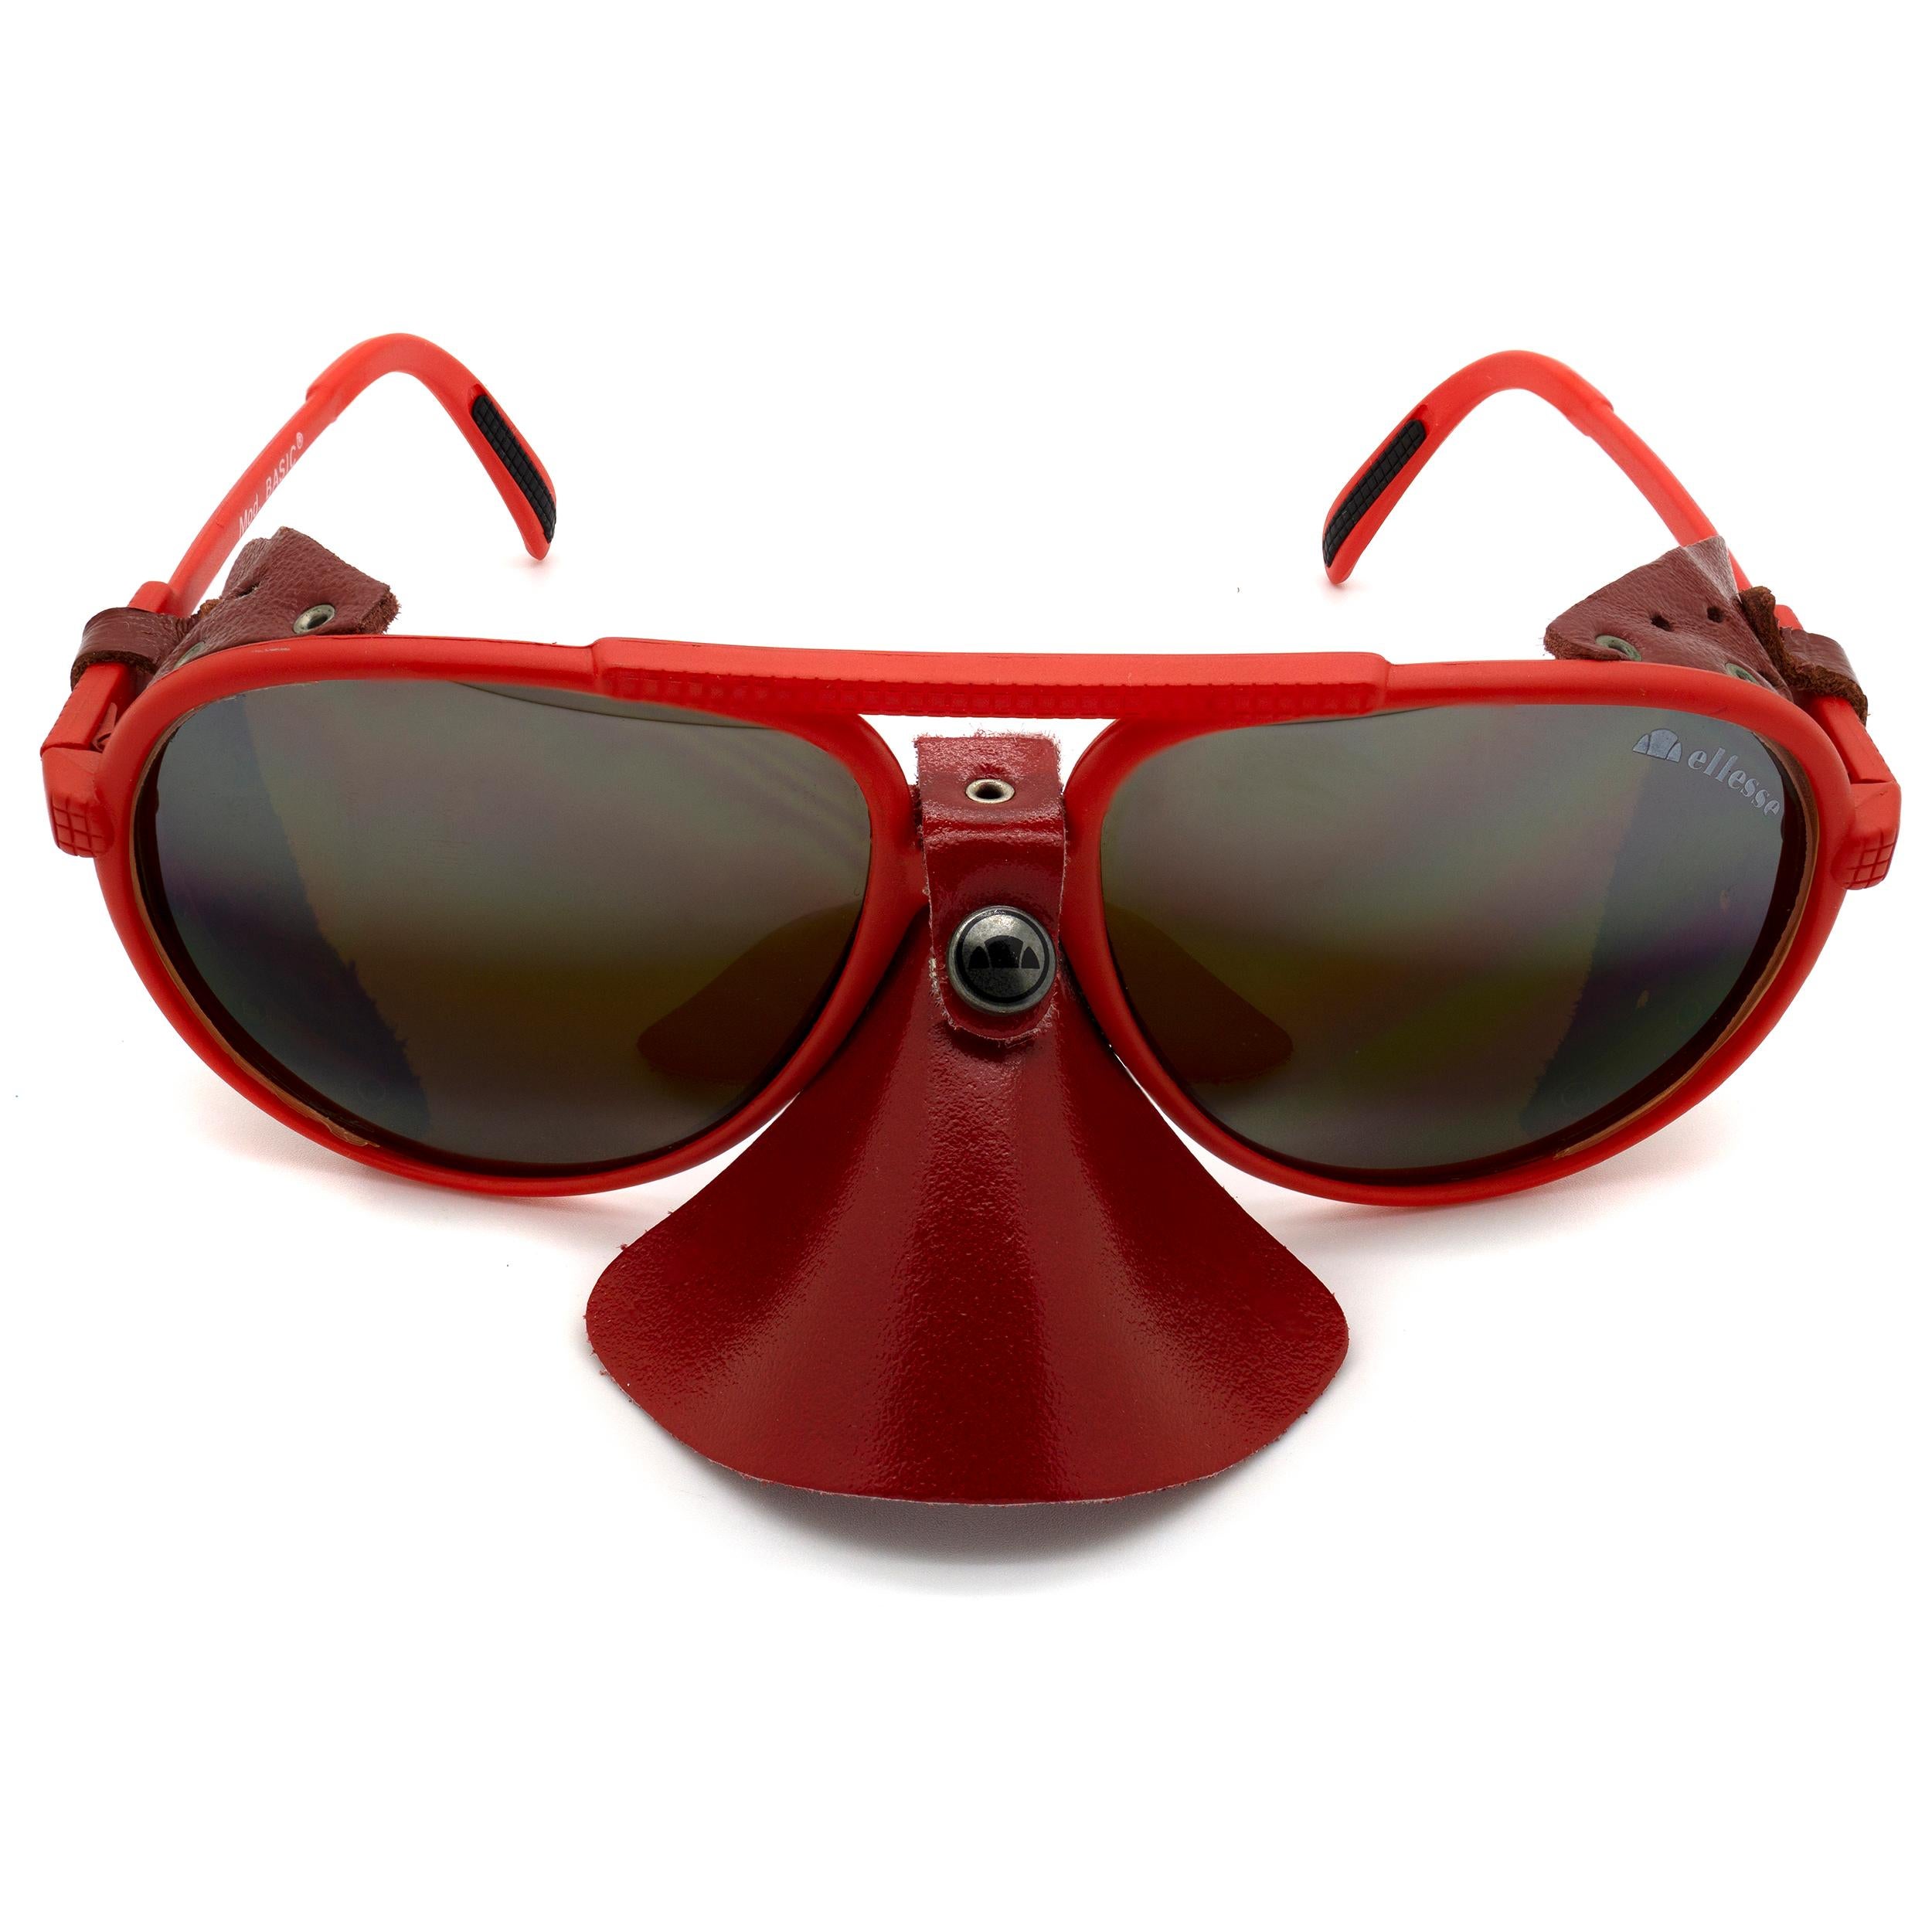 aviator sunglasses with side shields